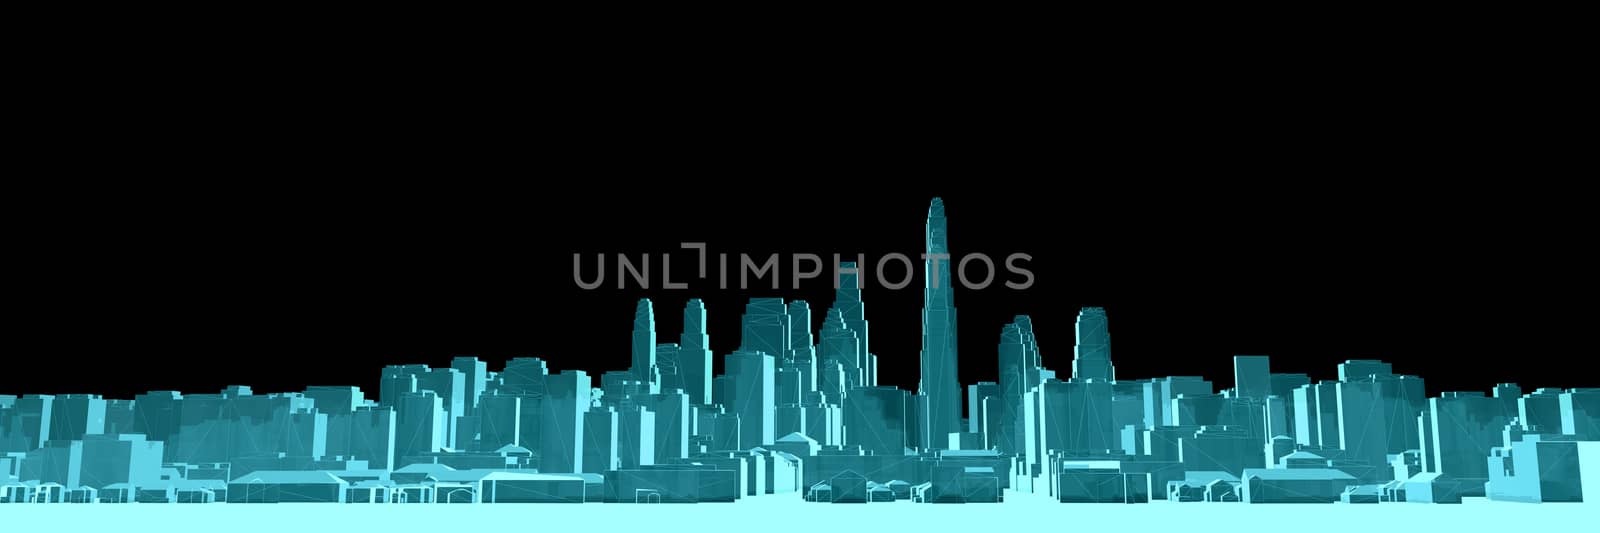 X-Ray Image Of Modern City on Black by cherezoff